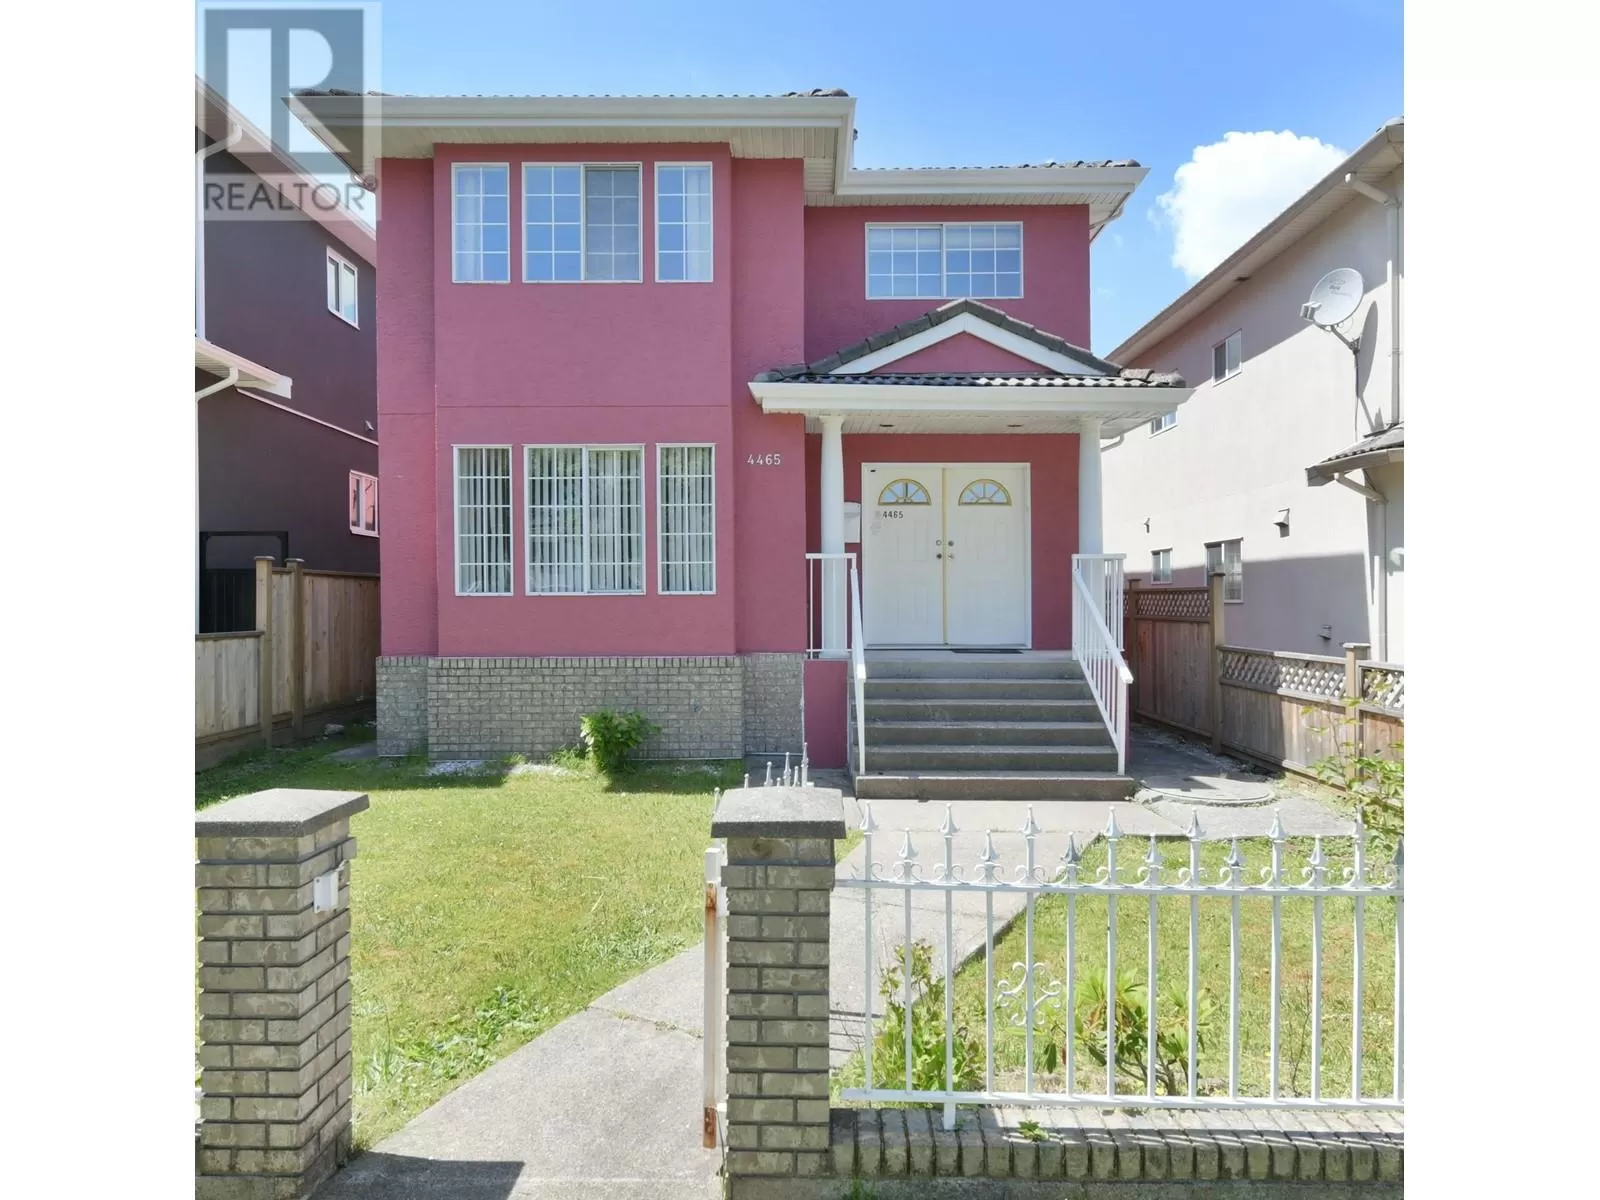 House for rent: 4465 Skeena Street, Vancouver, British Columbia V5R 2L8